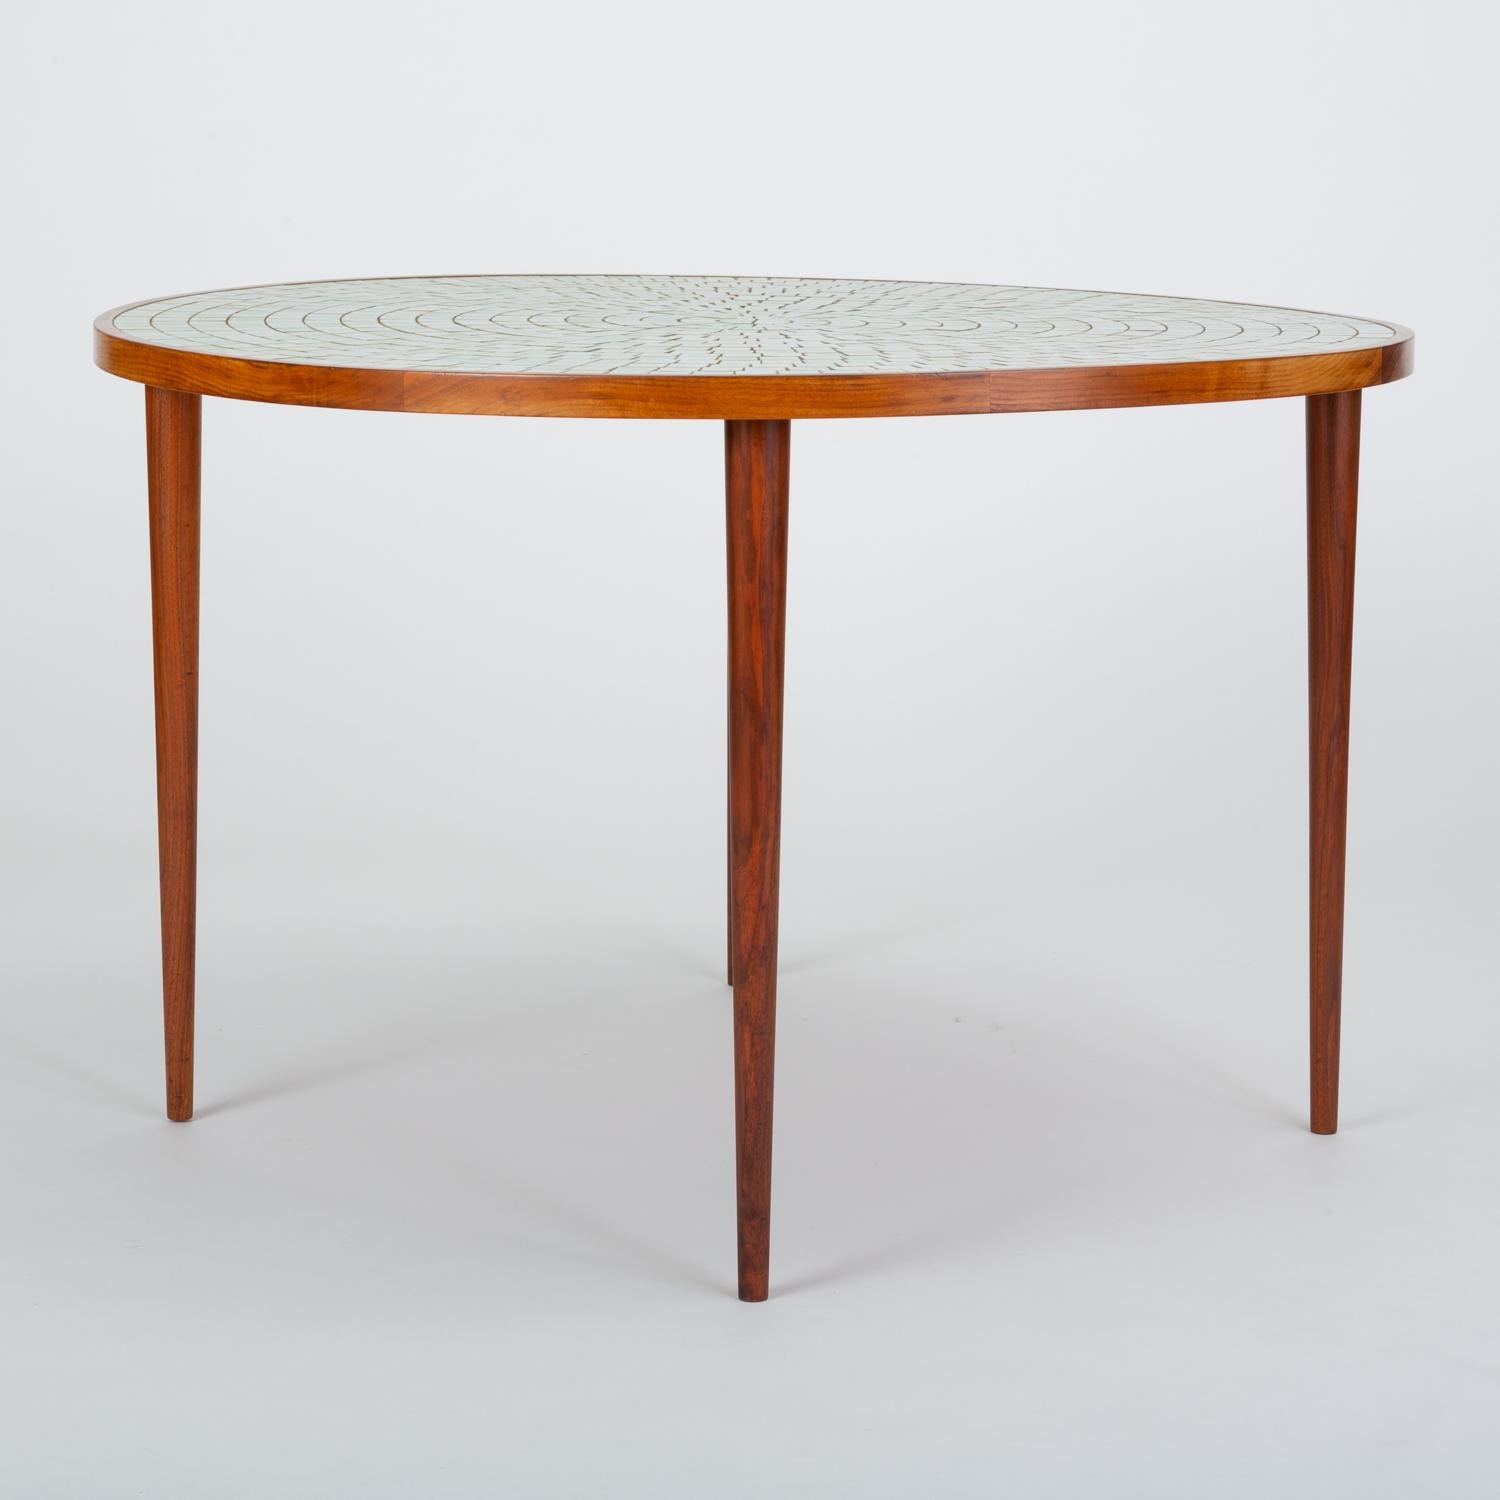 Ceramic Tile-Top Dining Table by Gordon & Jane Martz for Marshall Studios